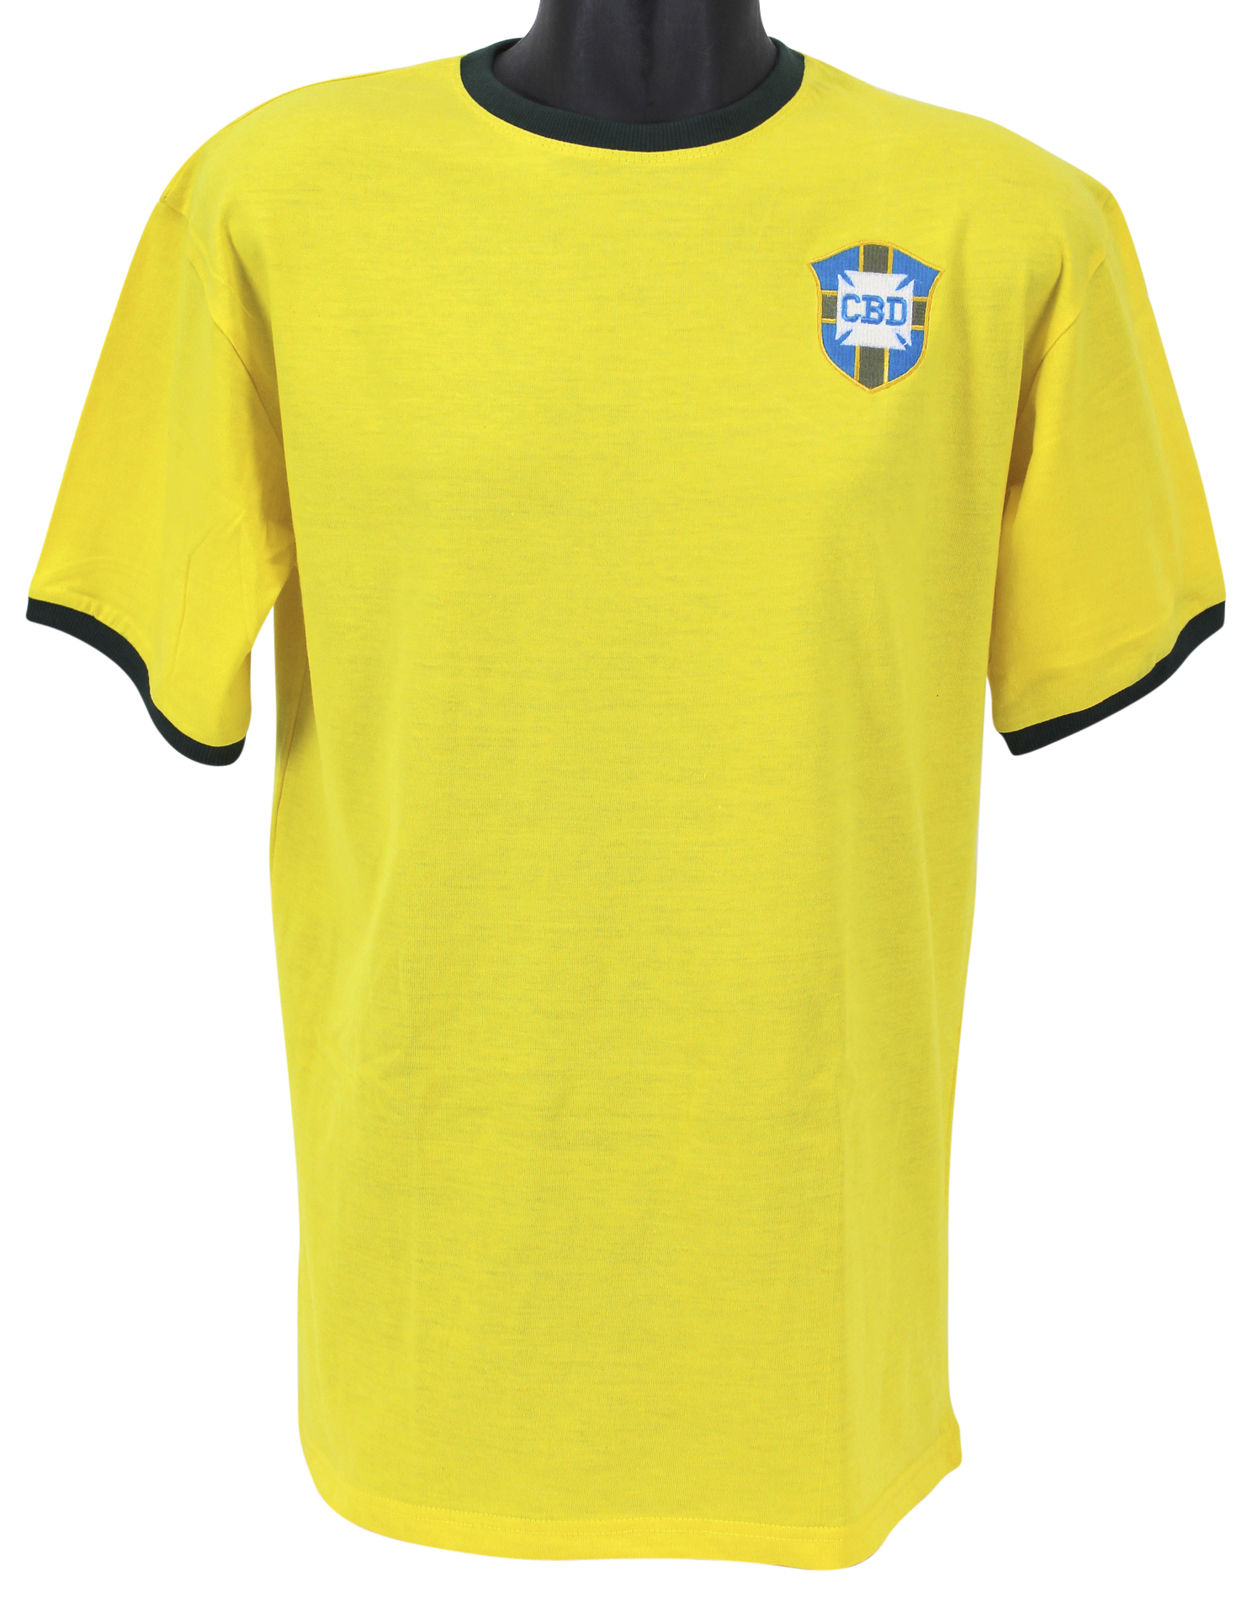 Lot Detail - Pele Signed Brazil Soccer Jersey (PSA/DNA)